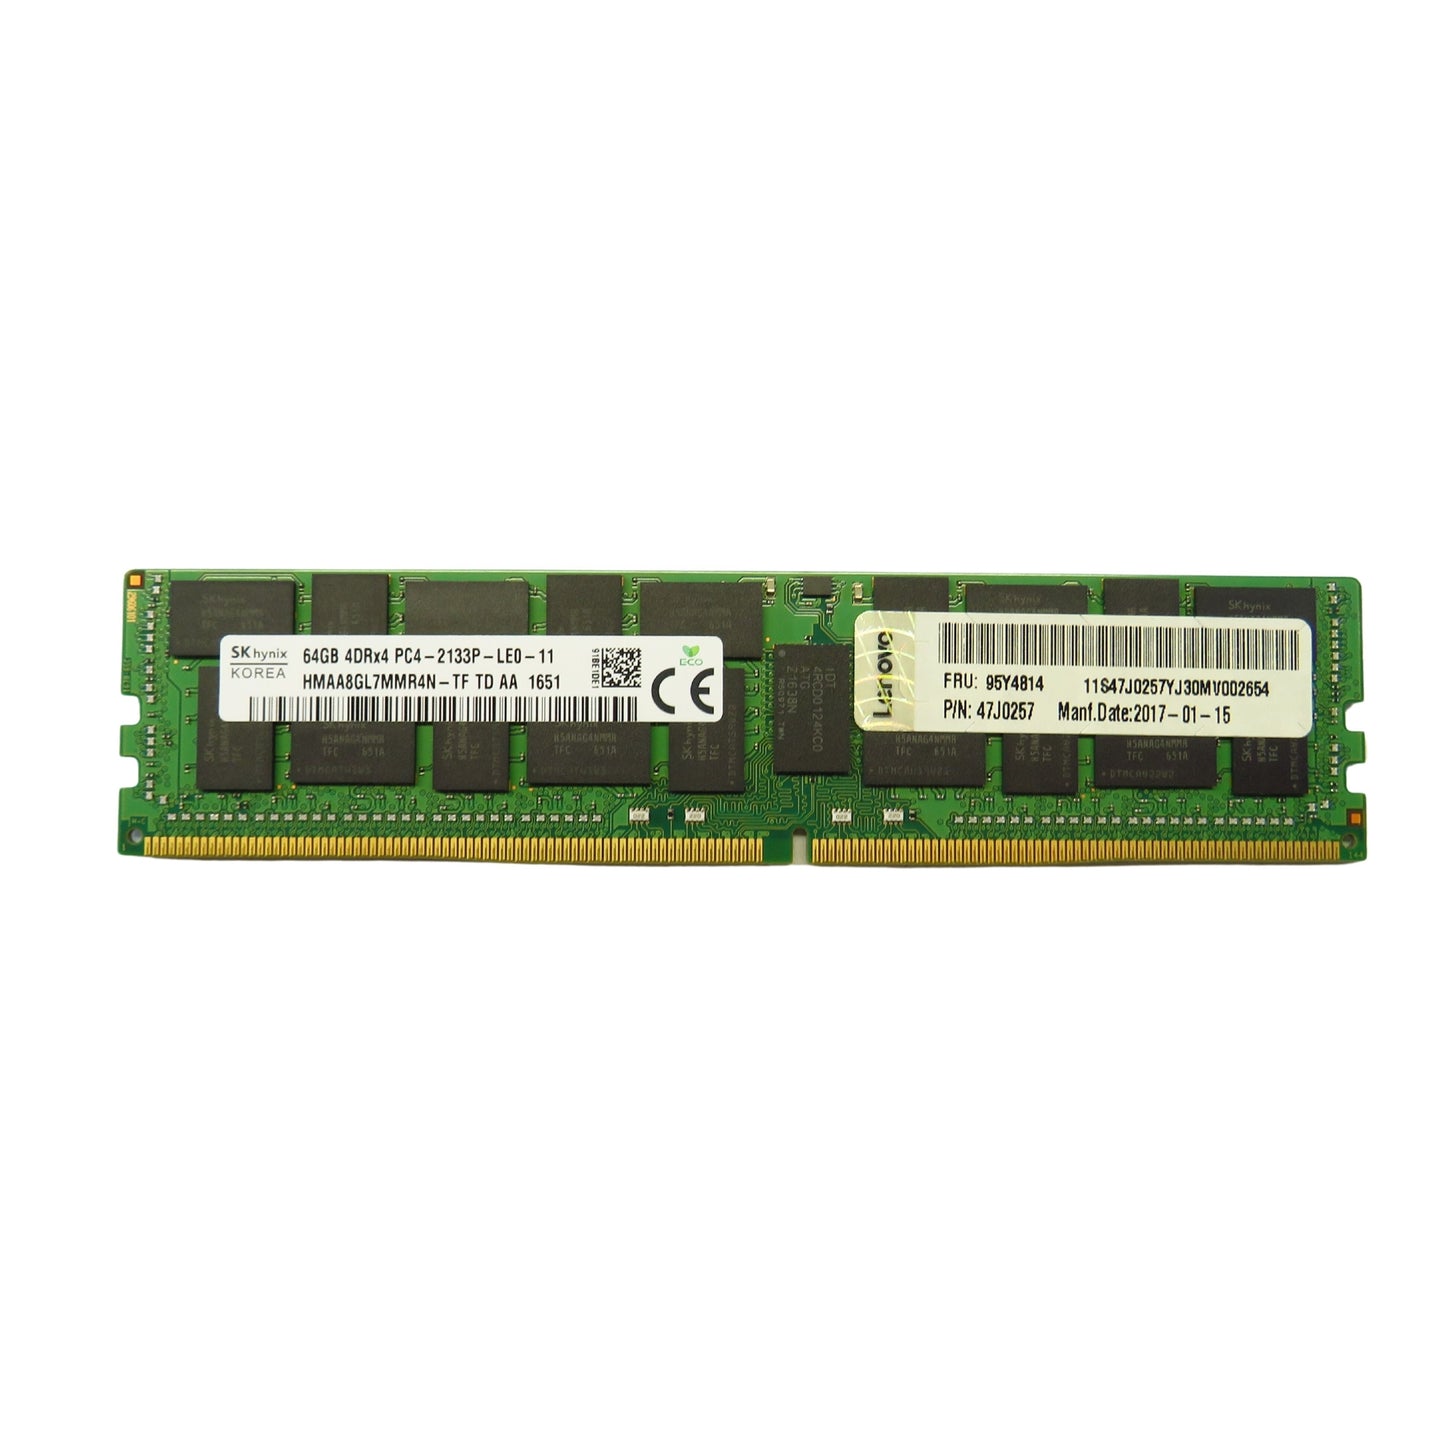 Lenovo 95Y4814 47J0257 64GB 4DRx4 PC4-2133P 2133MHz DDR4 LRDIMM Server Memory (Refurbished)